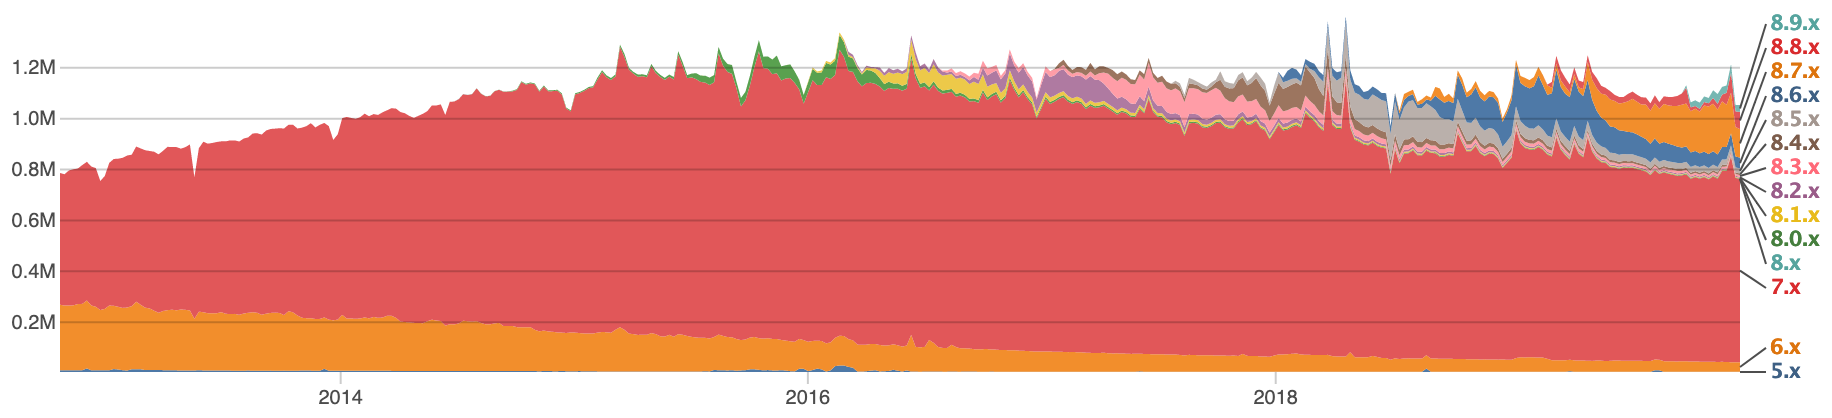 Drupal usage up to January 2020